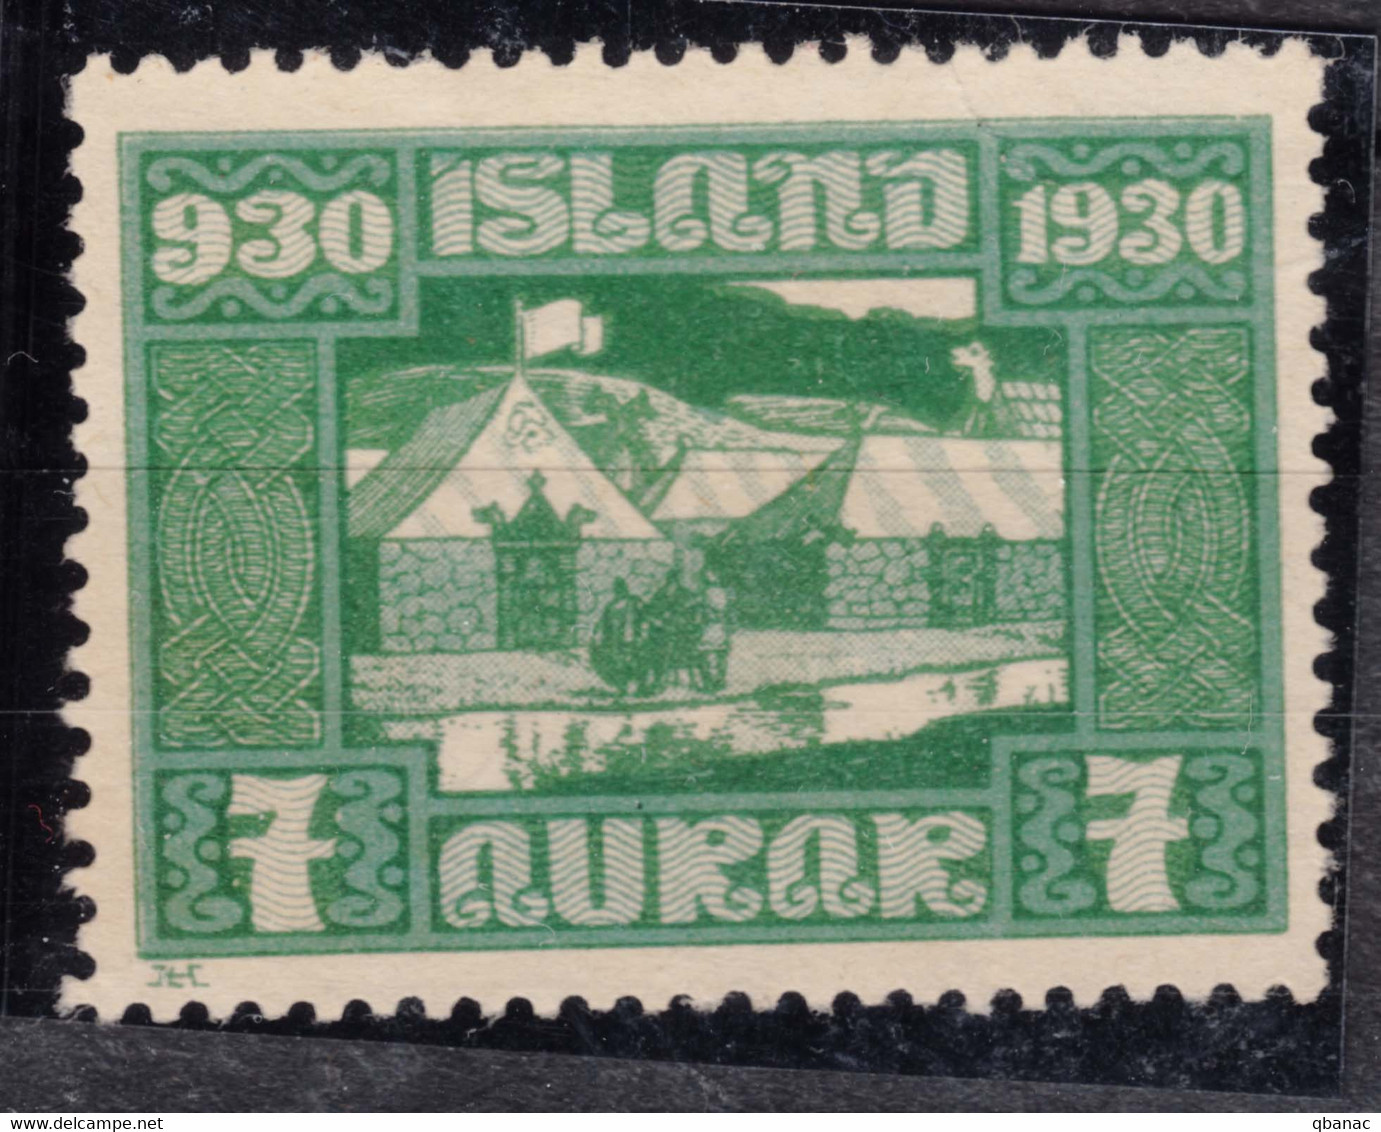 Iceland Island Ijsland 1930 Mi#127 Mint No Gum, No Hinge Mark - Nuovi